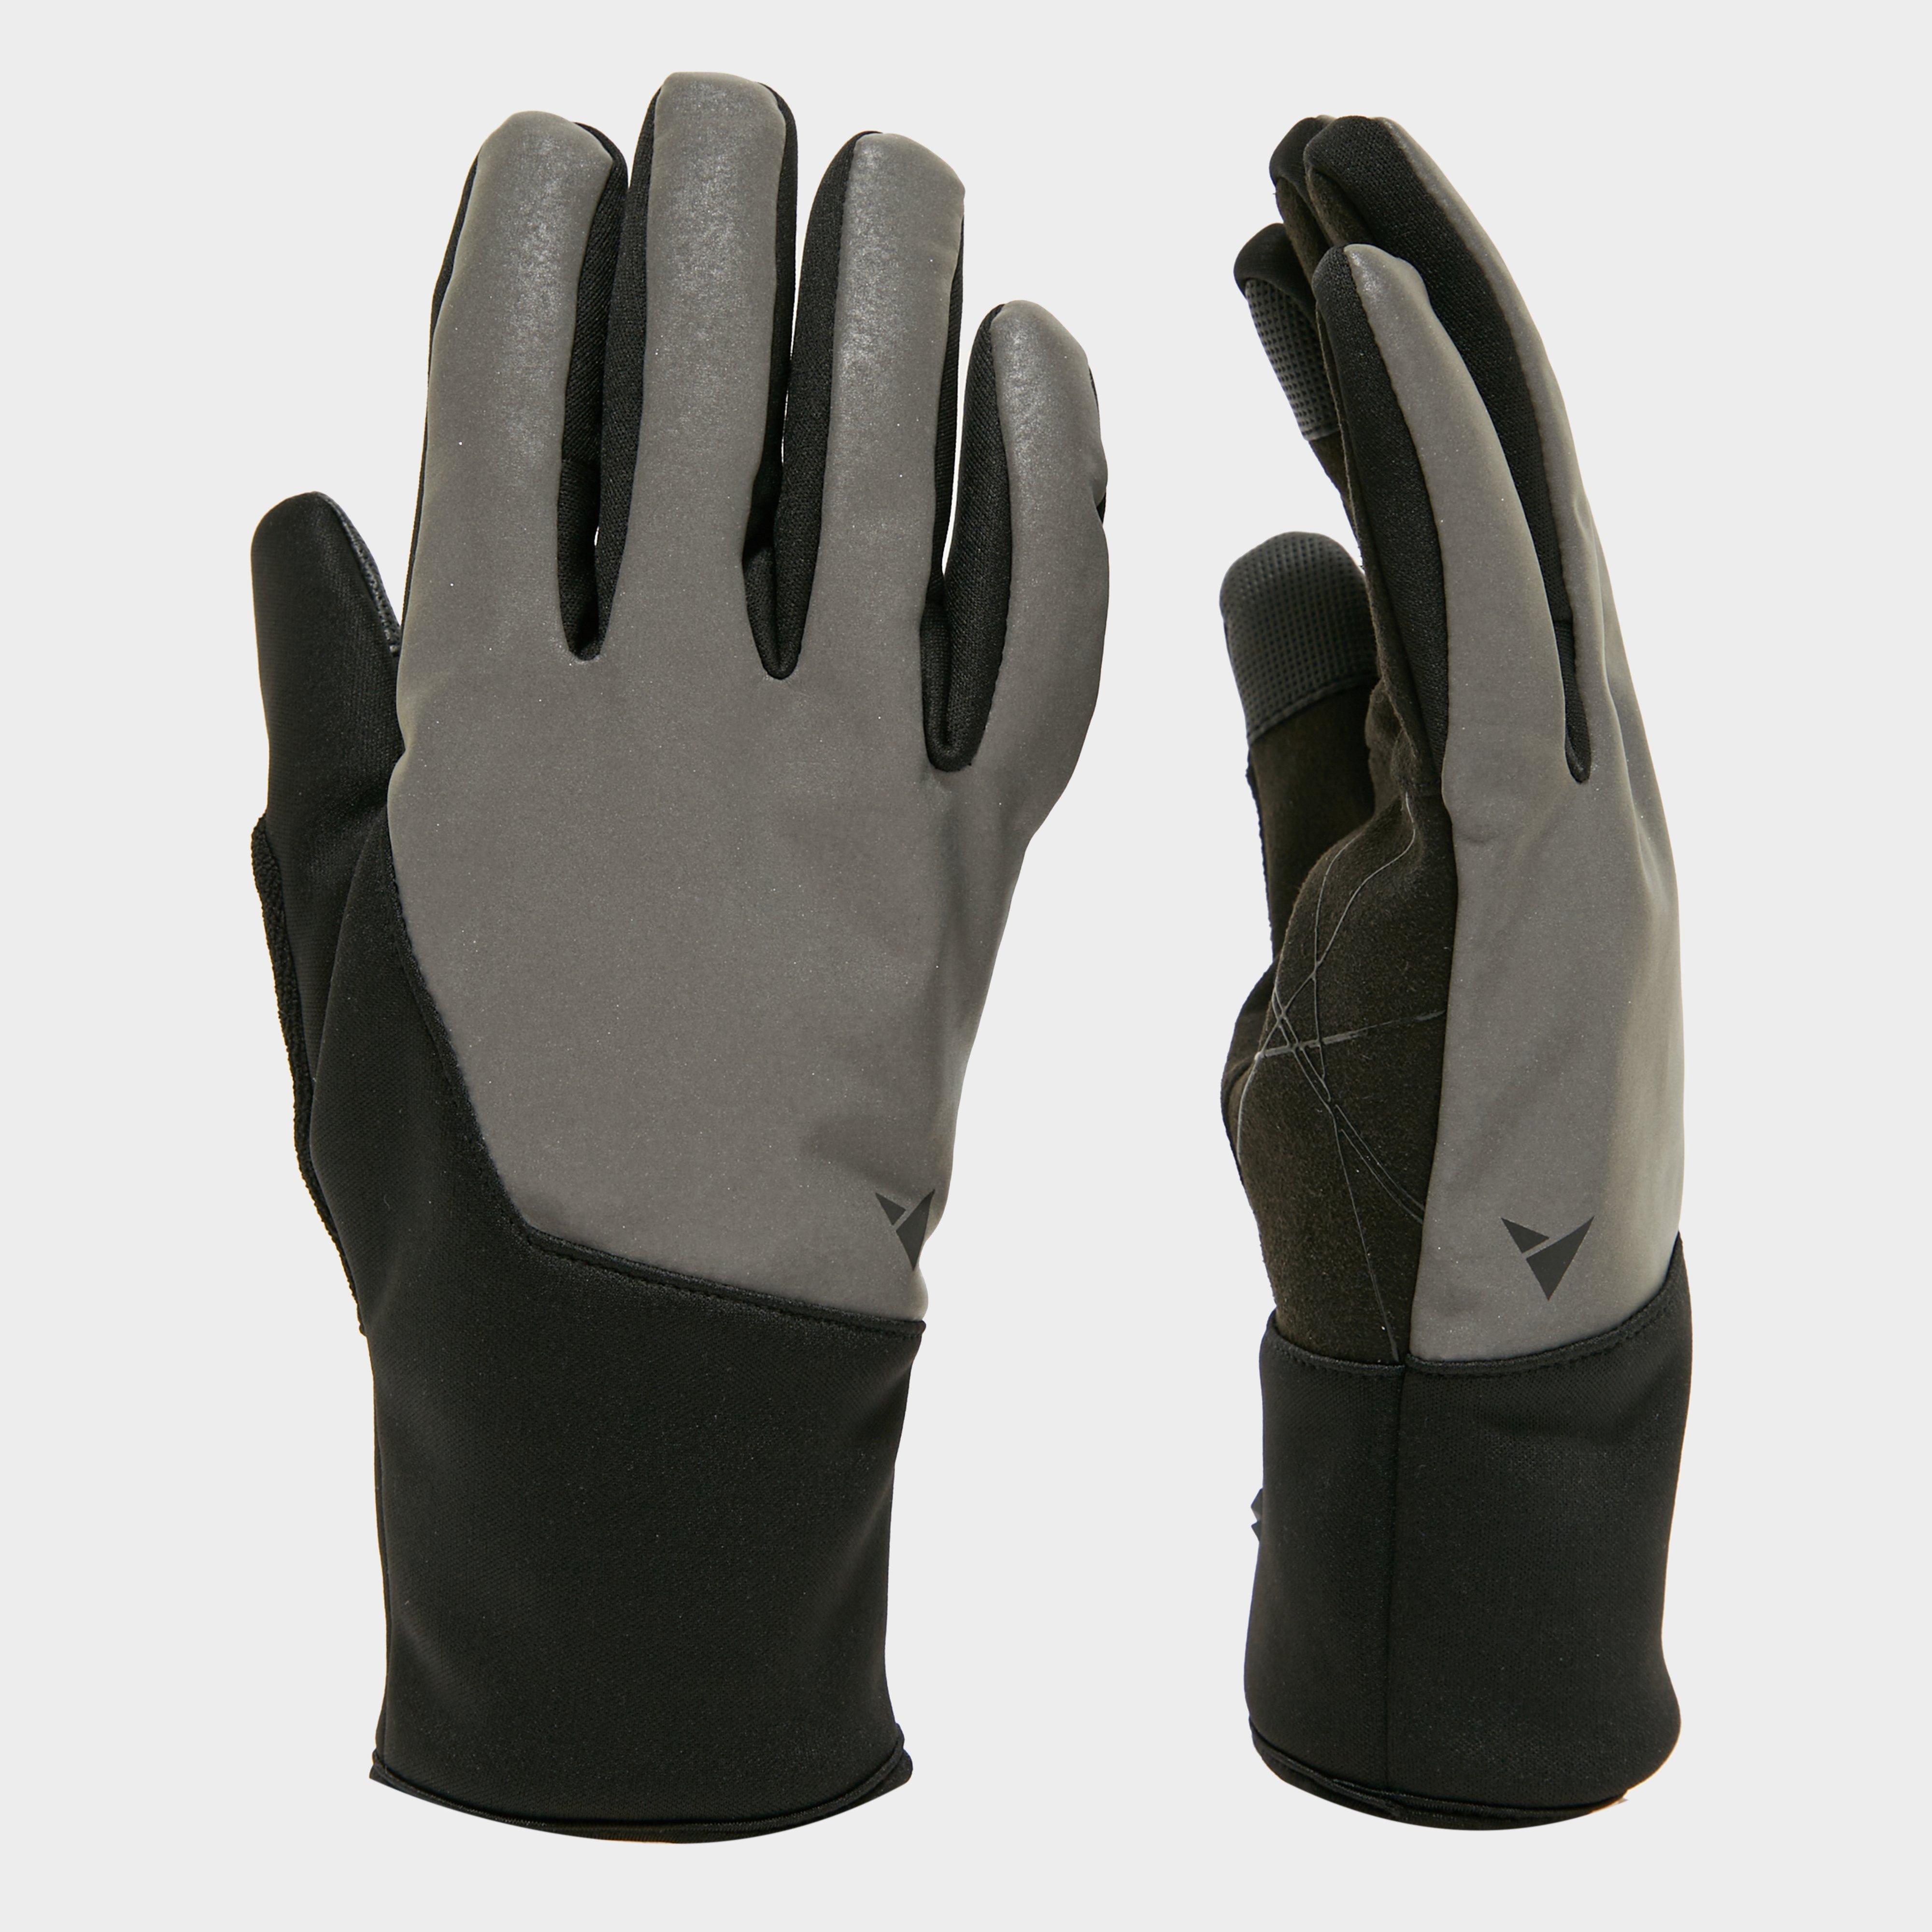  Altura Thunderstorm Cycling Gloves, Black